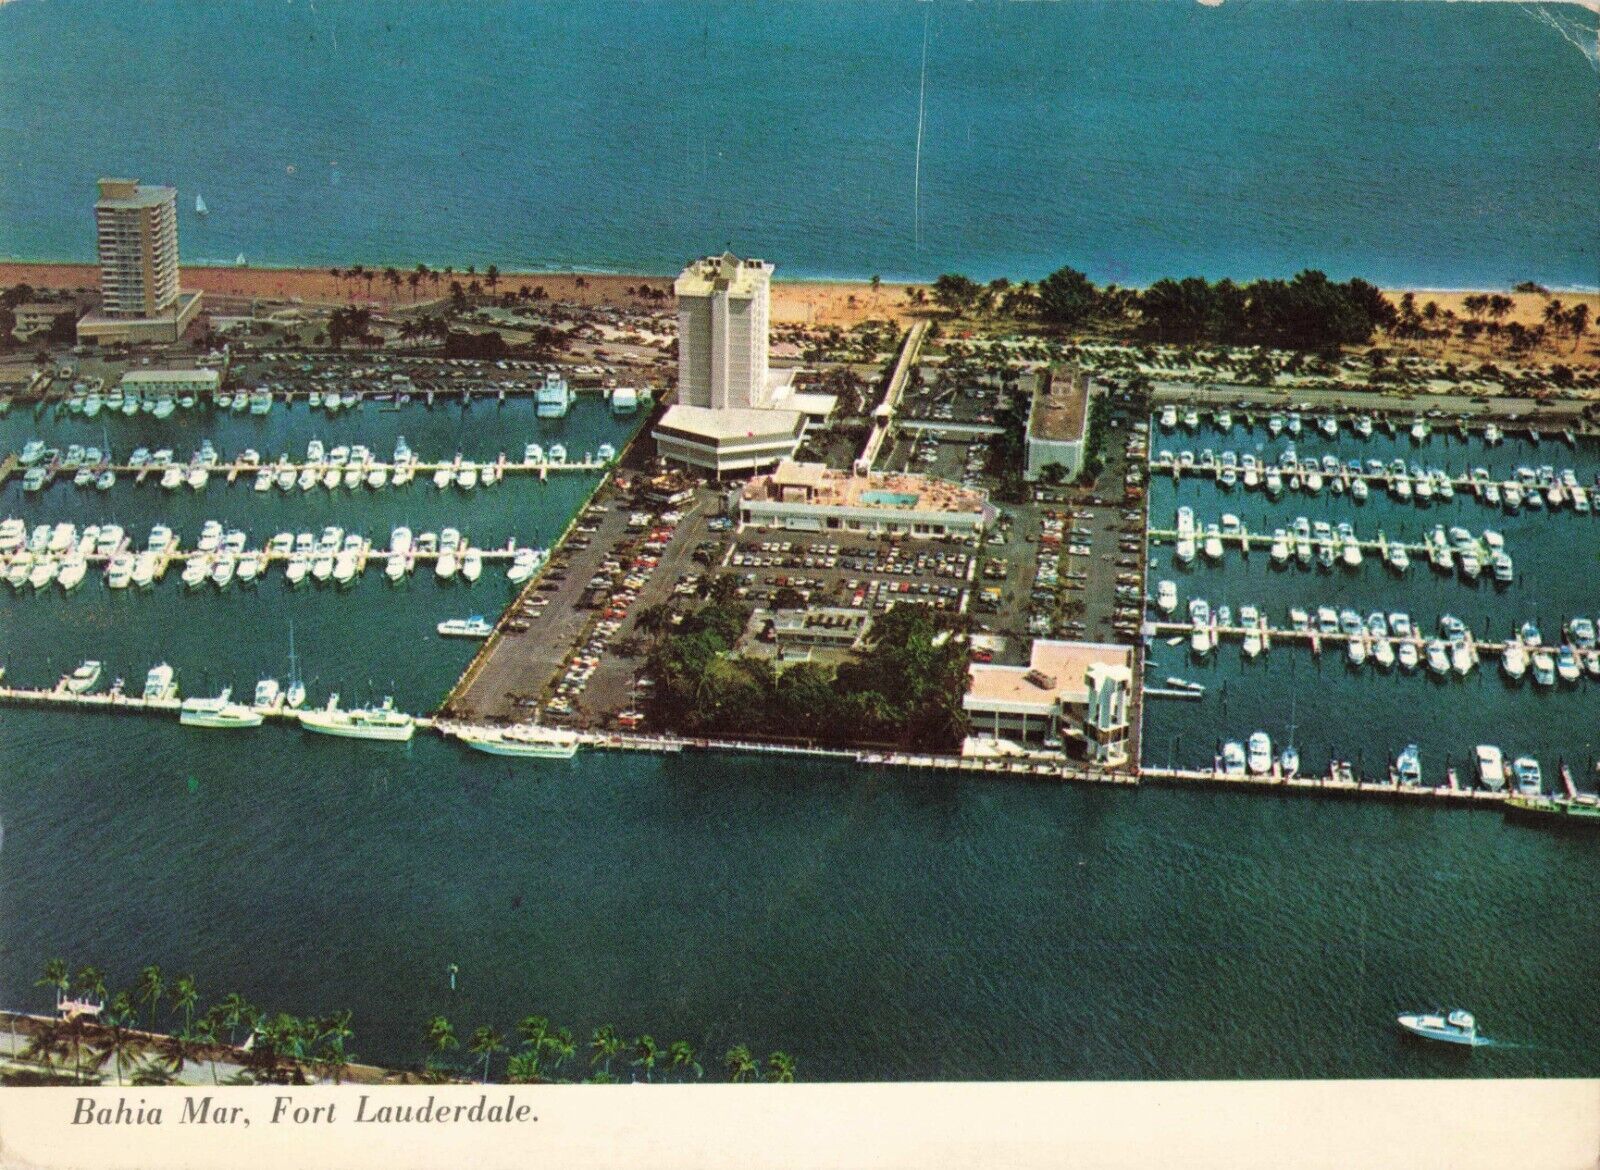 Fort Lauderdale Florida, Bahia Mar Yacht Basin Marina Aerial View, VTG Postcard